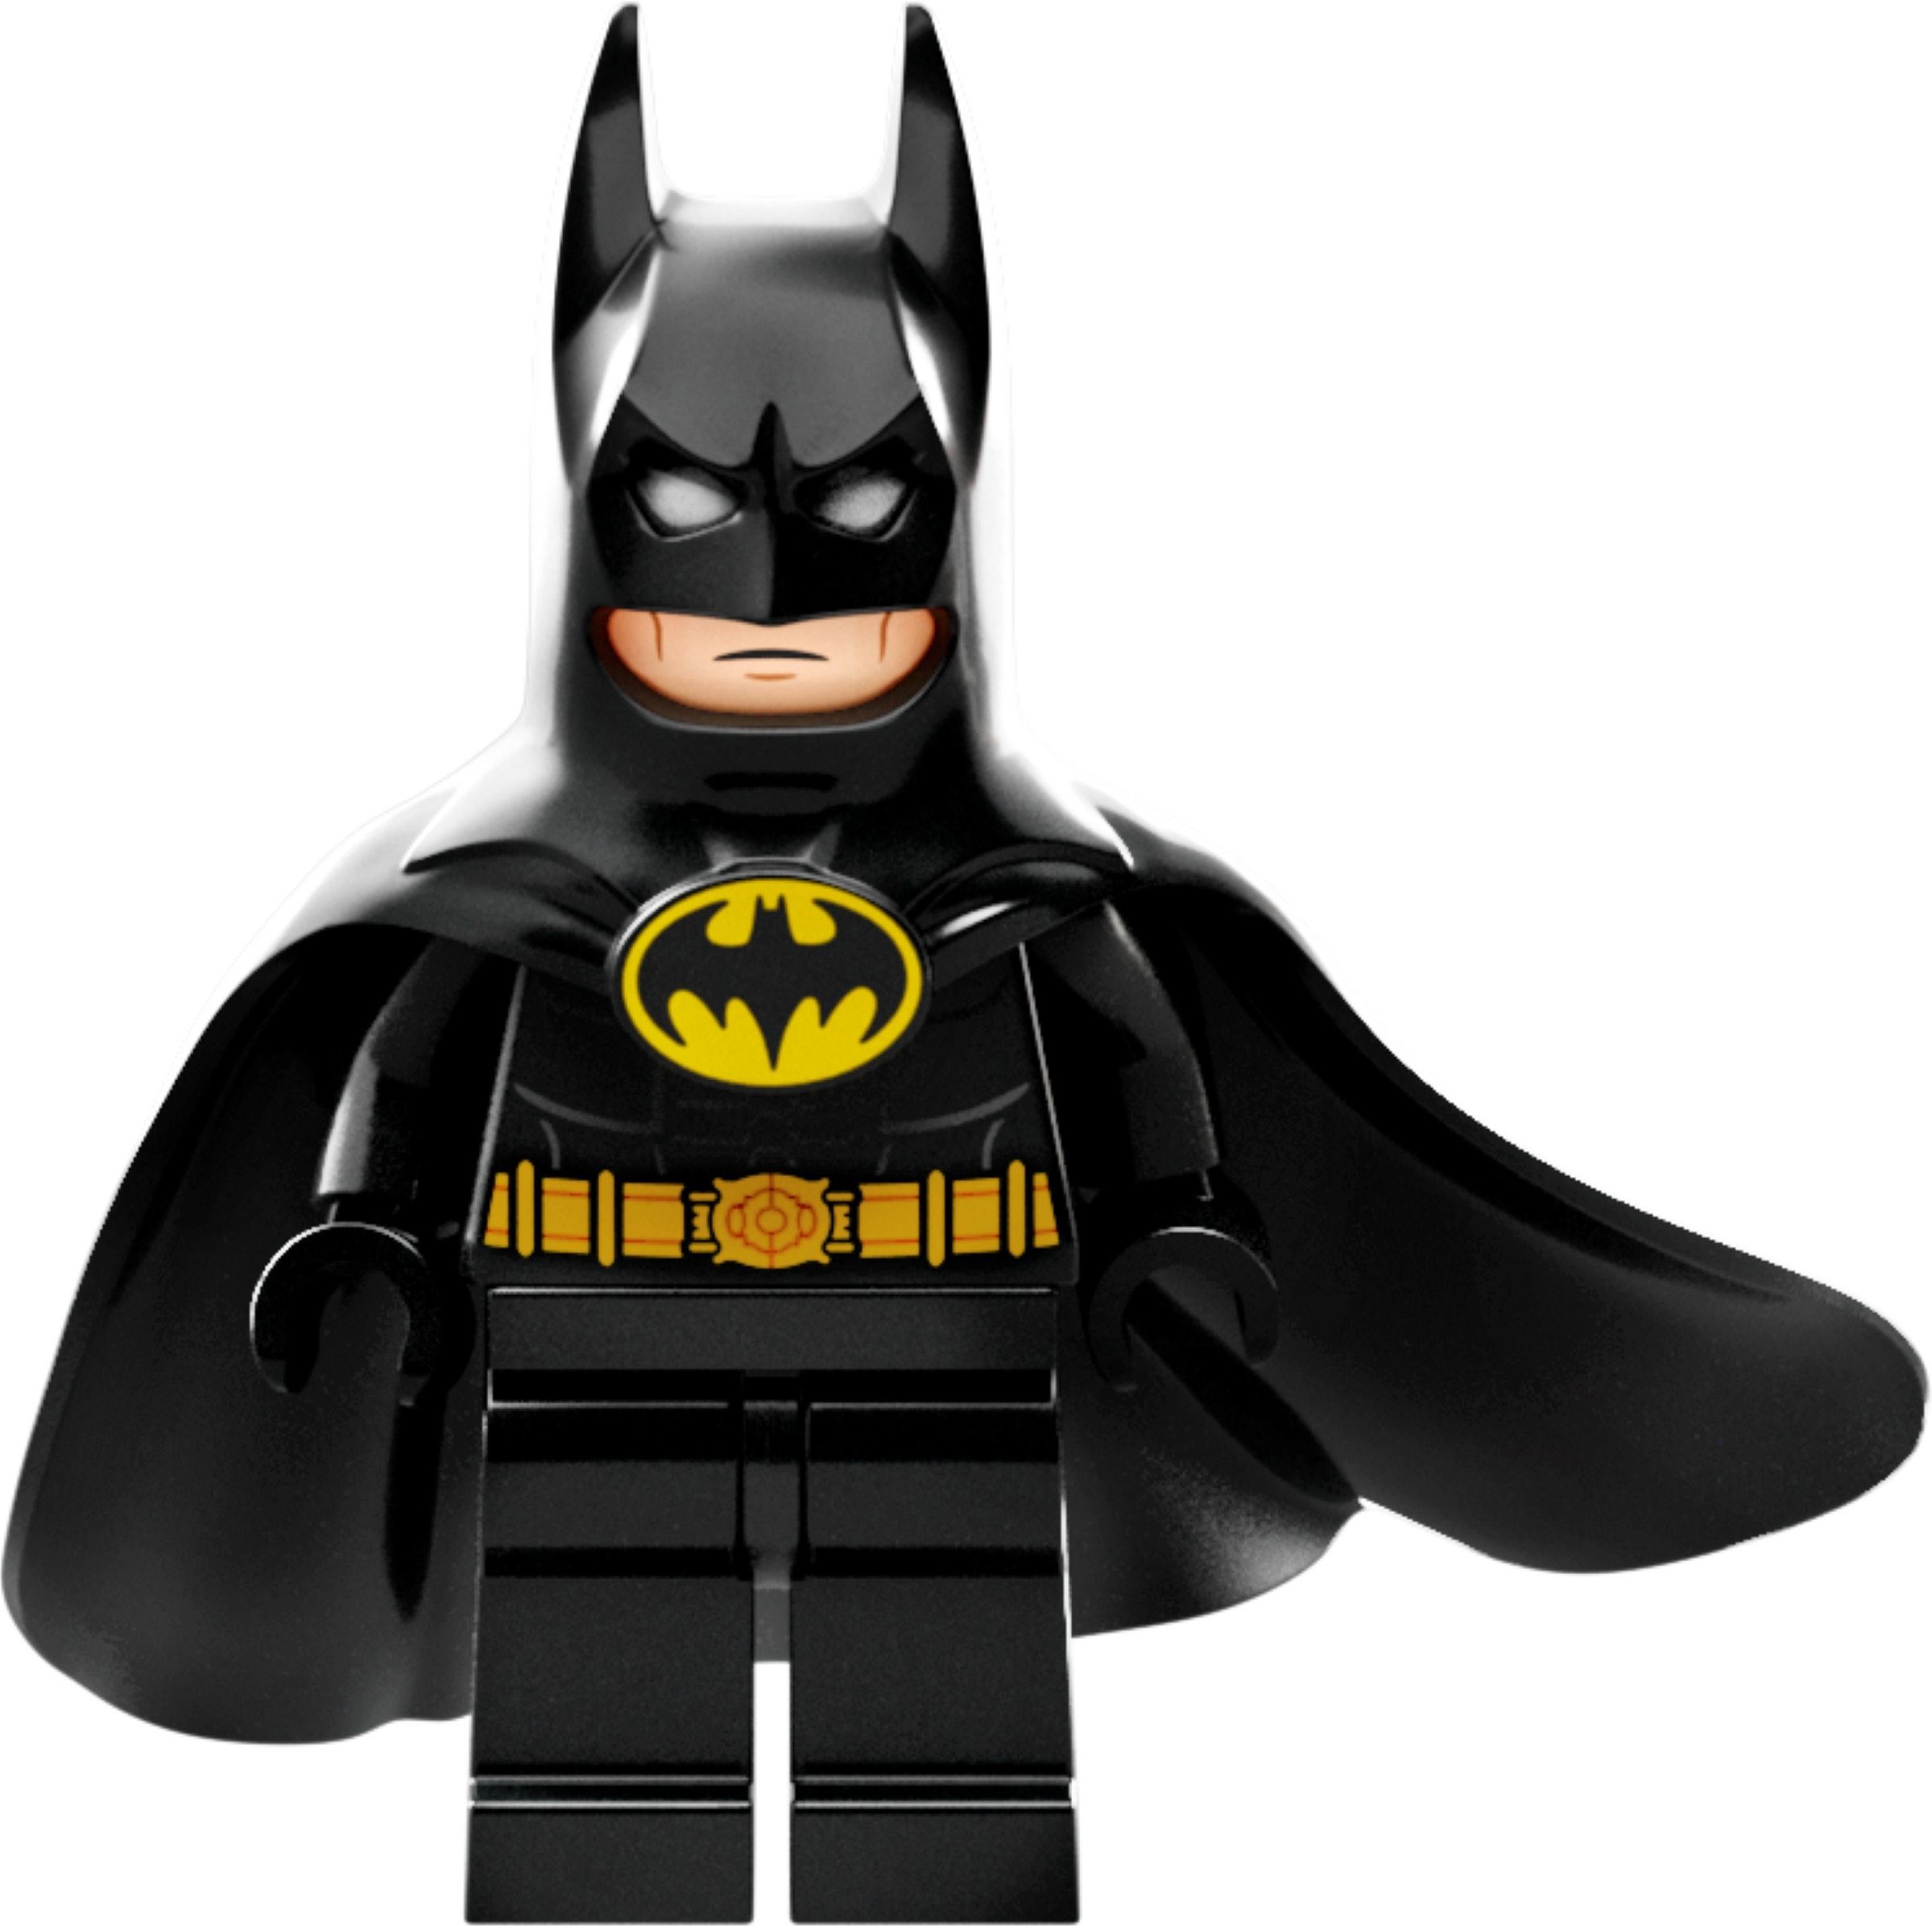 LEGO Movie 2 Trailer Shows off New Batman Costume